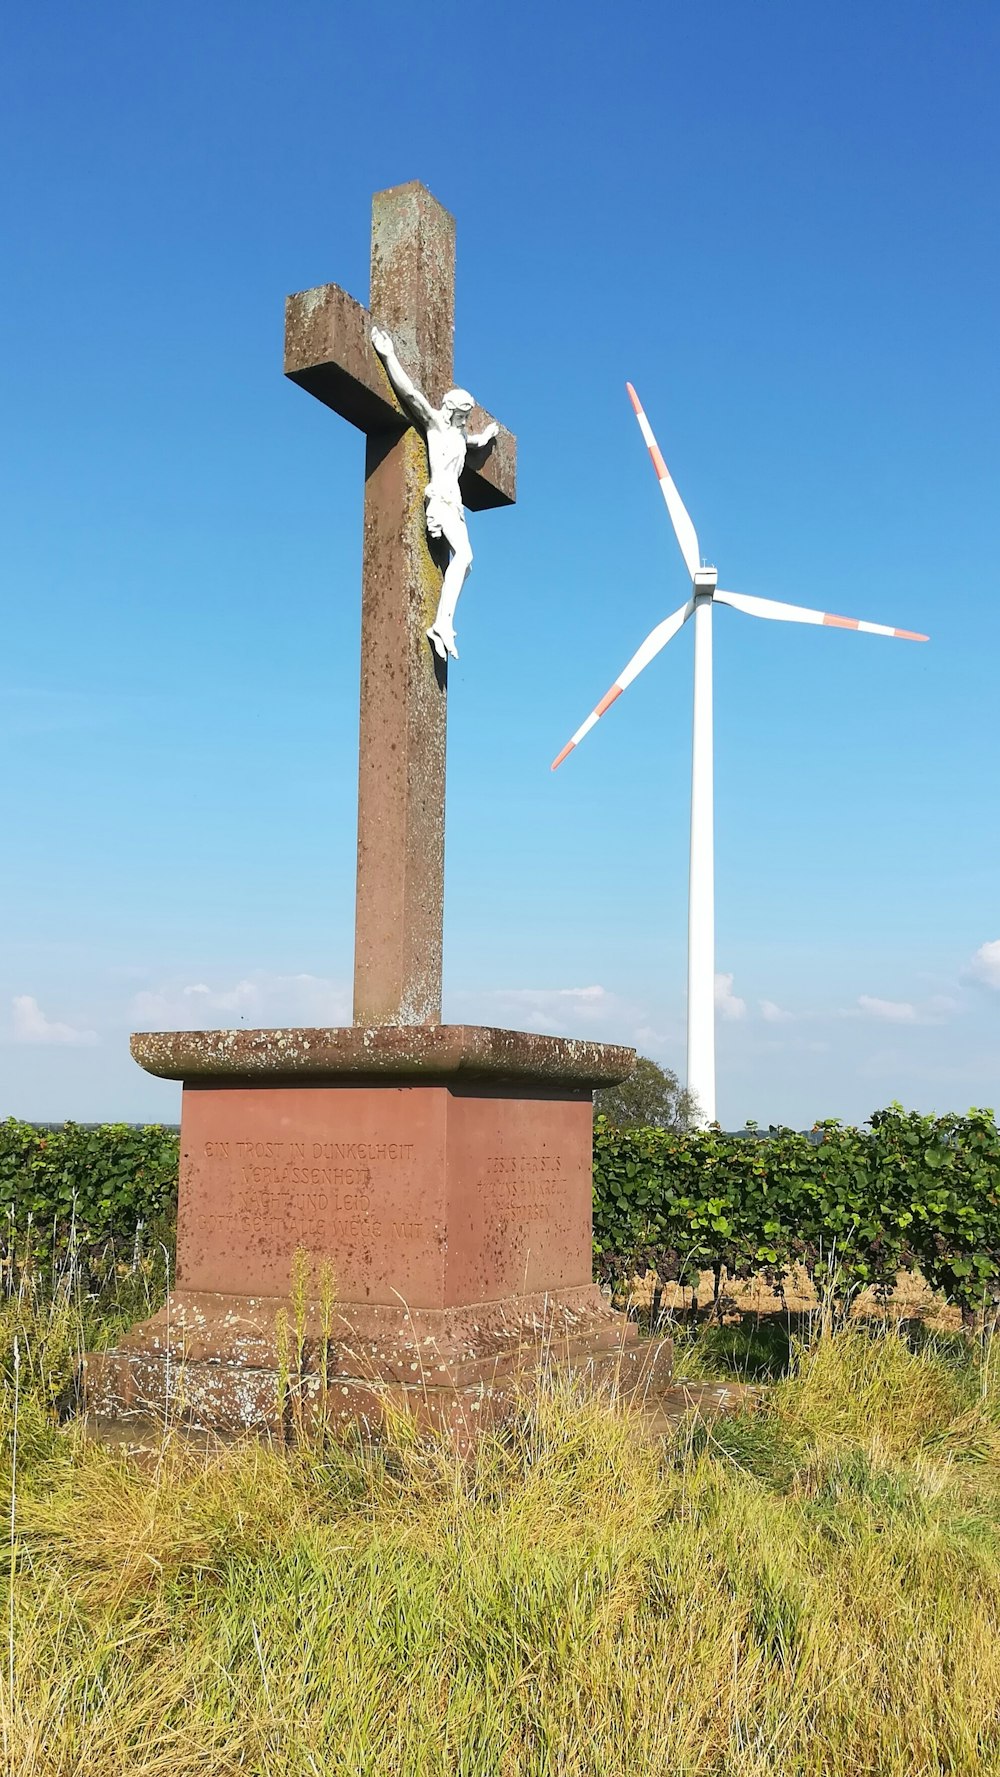 a cross and a wind turbine in a field